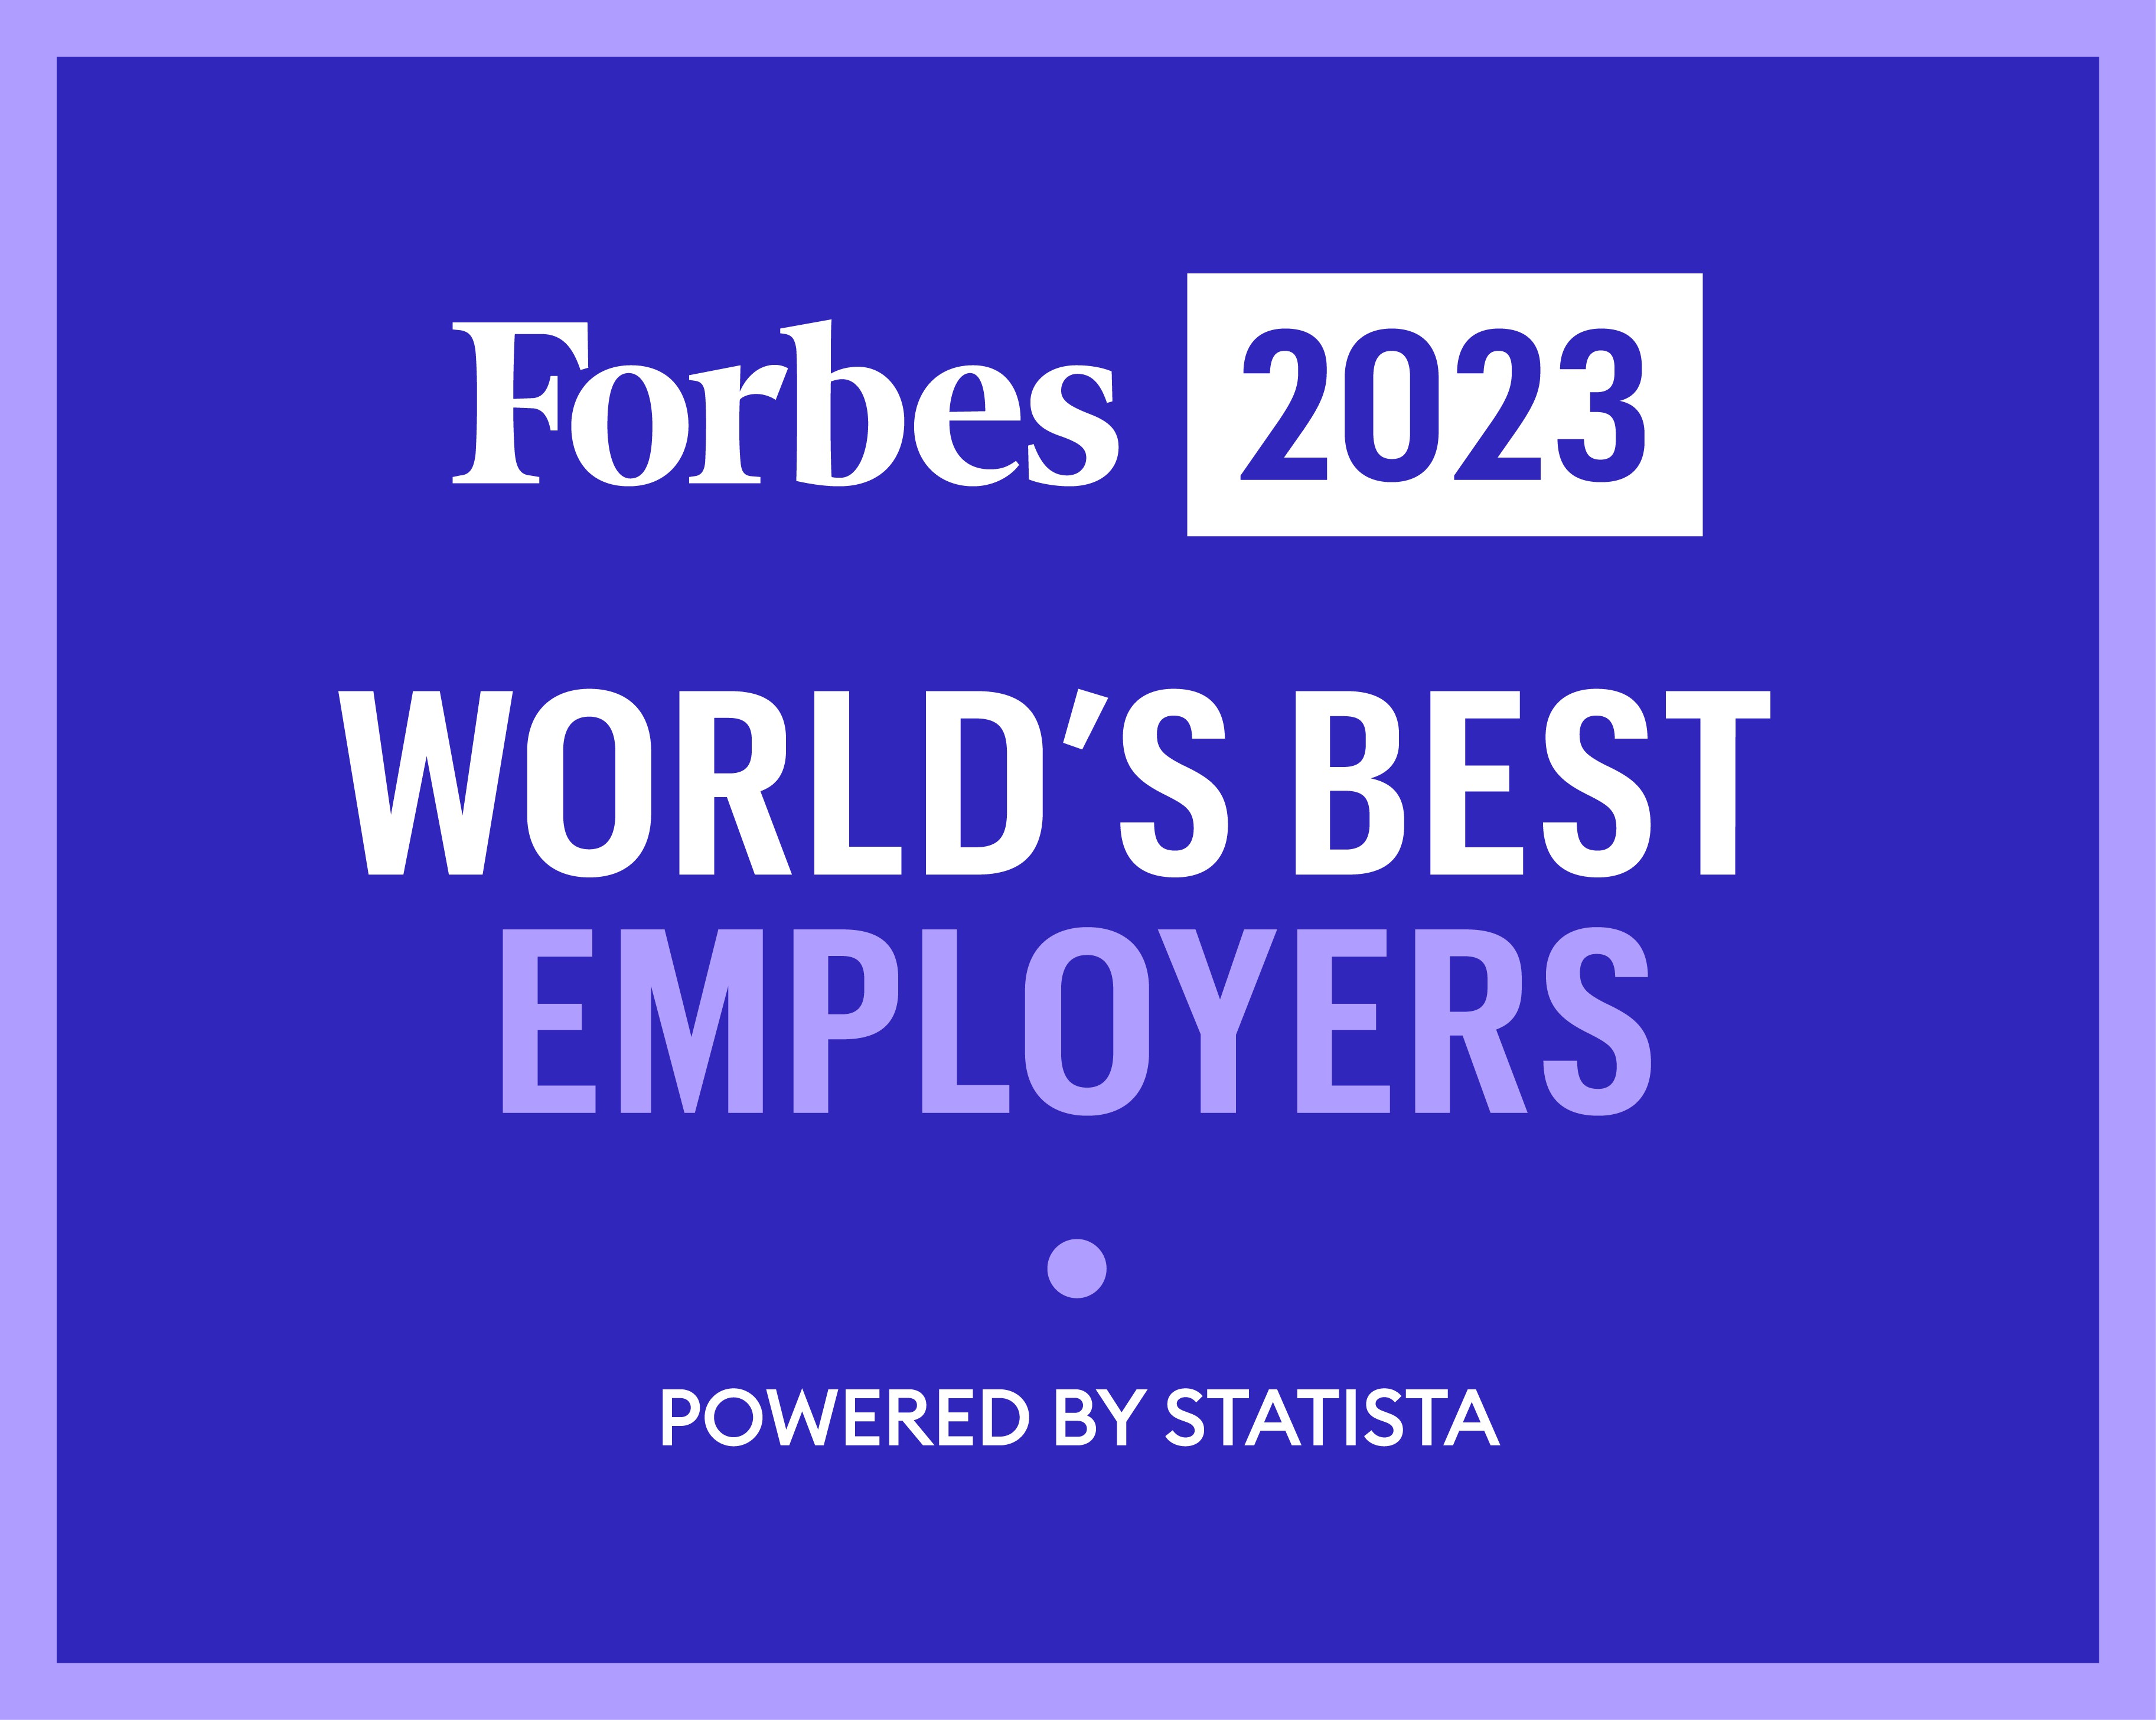 Award: Forbes 2023 - World's best employers